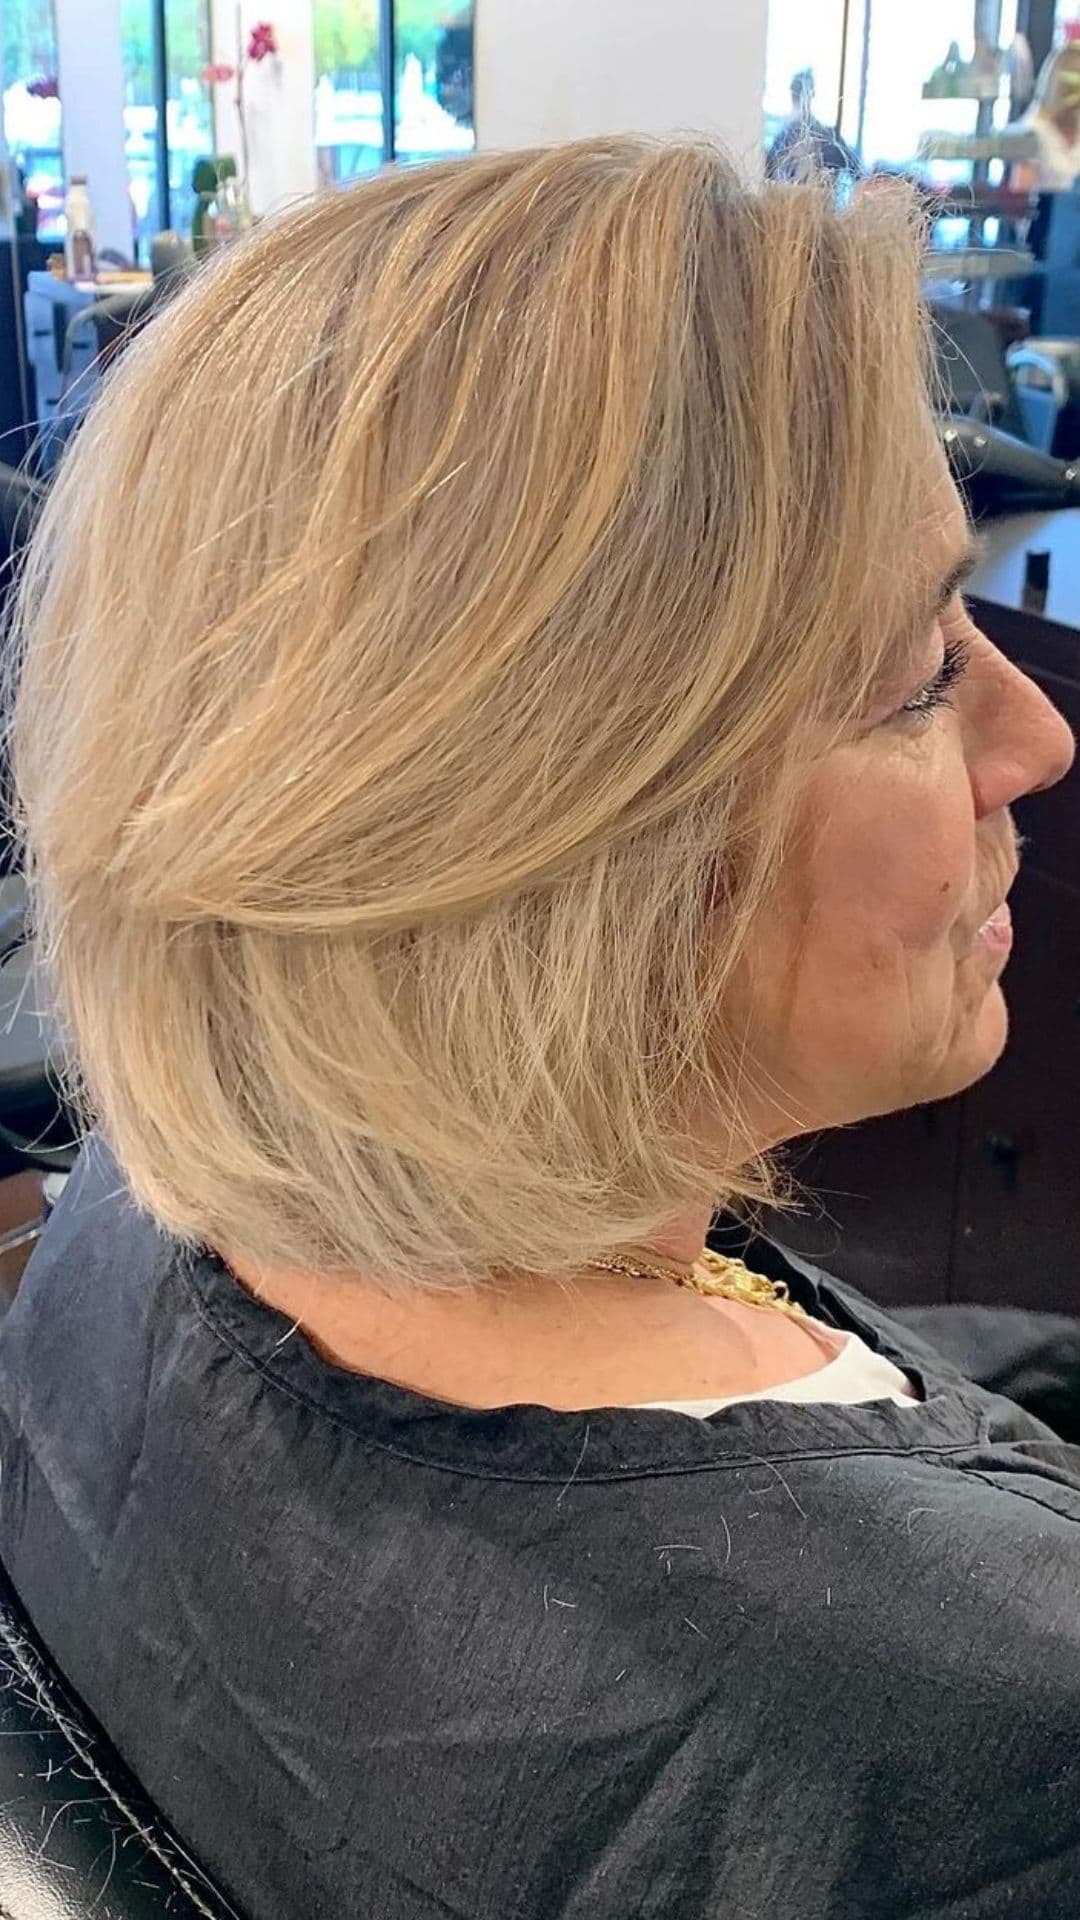 An older woman modelling a shaggy blonde bob haircut.